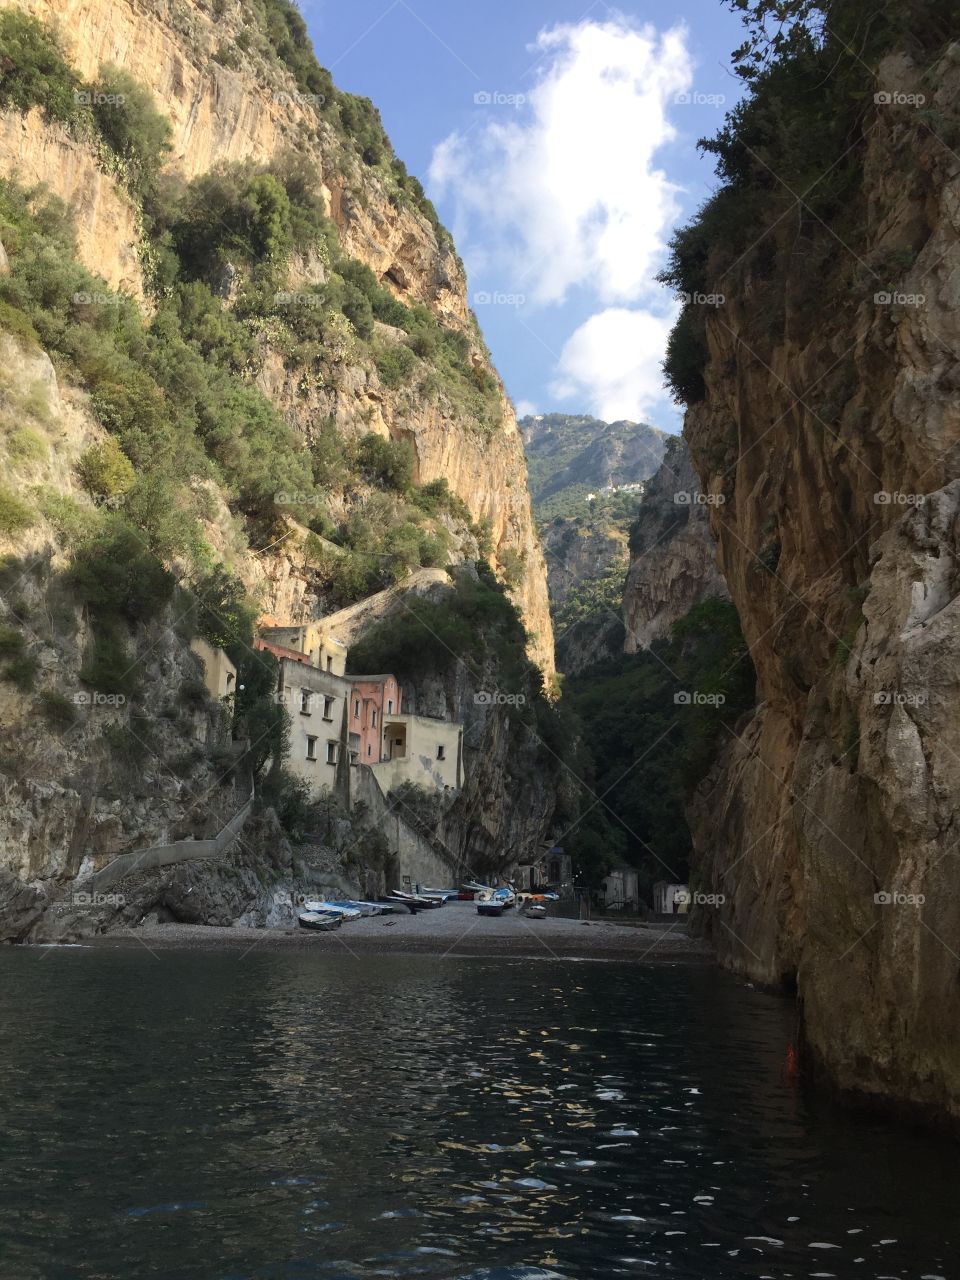 Secret cove on amalfi coast